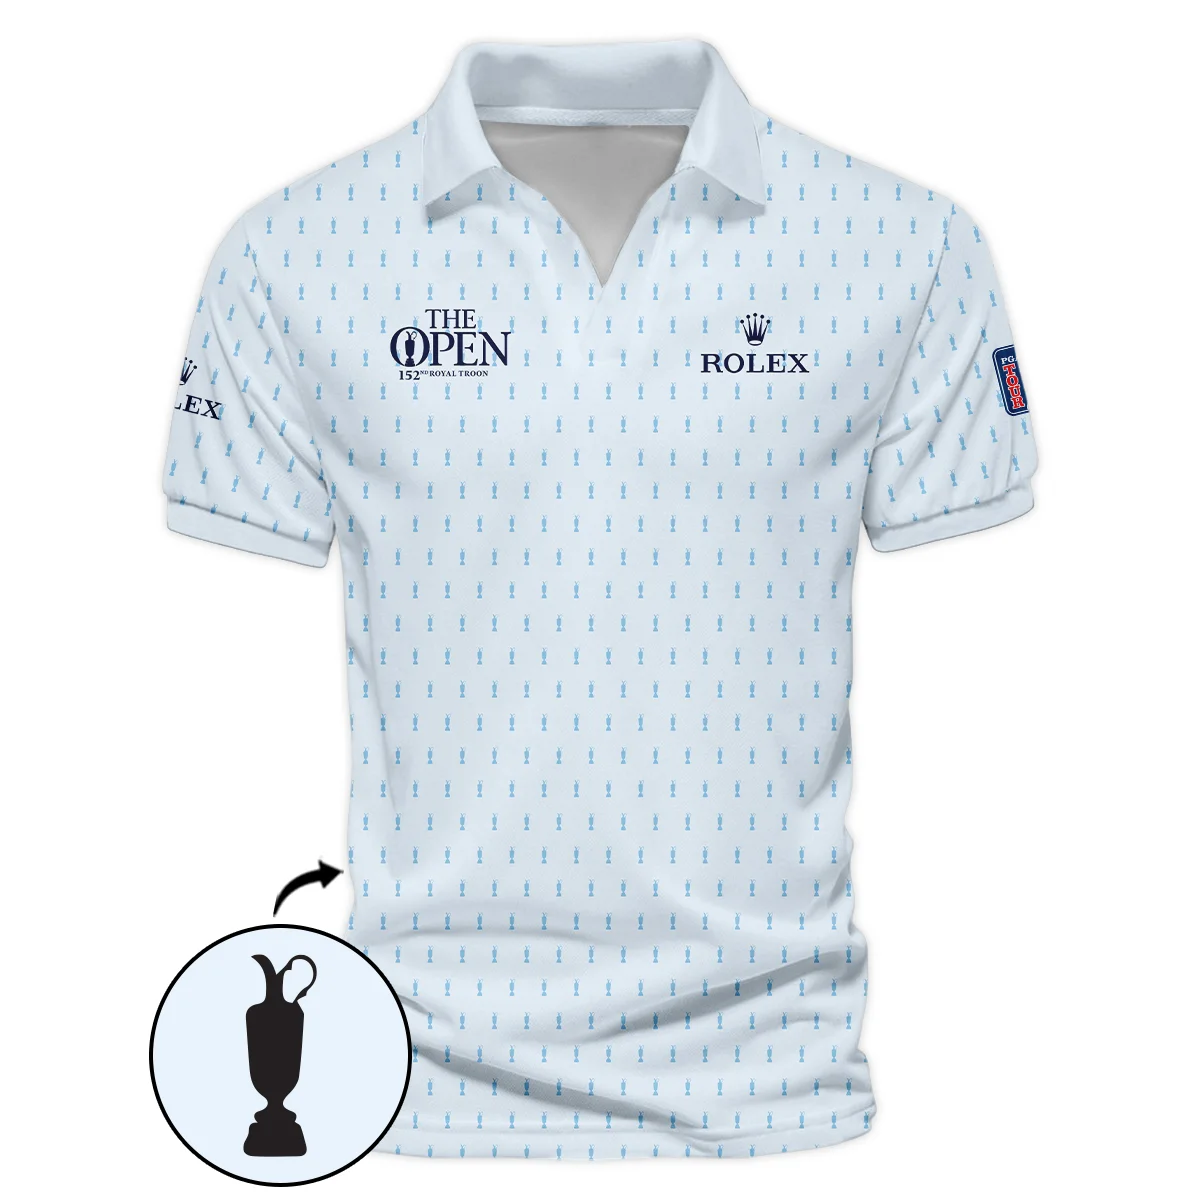 Golf Sport Light Blue Pattern Cup 152nd Open Championship Rolex Performance Quarter Zip Sweatshirt With Pockets All Over Prints QTTOP160624A01ROXQZS